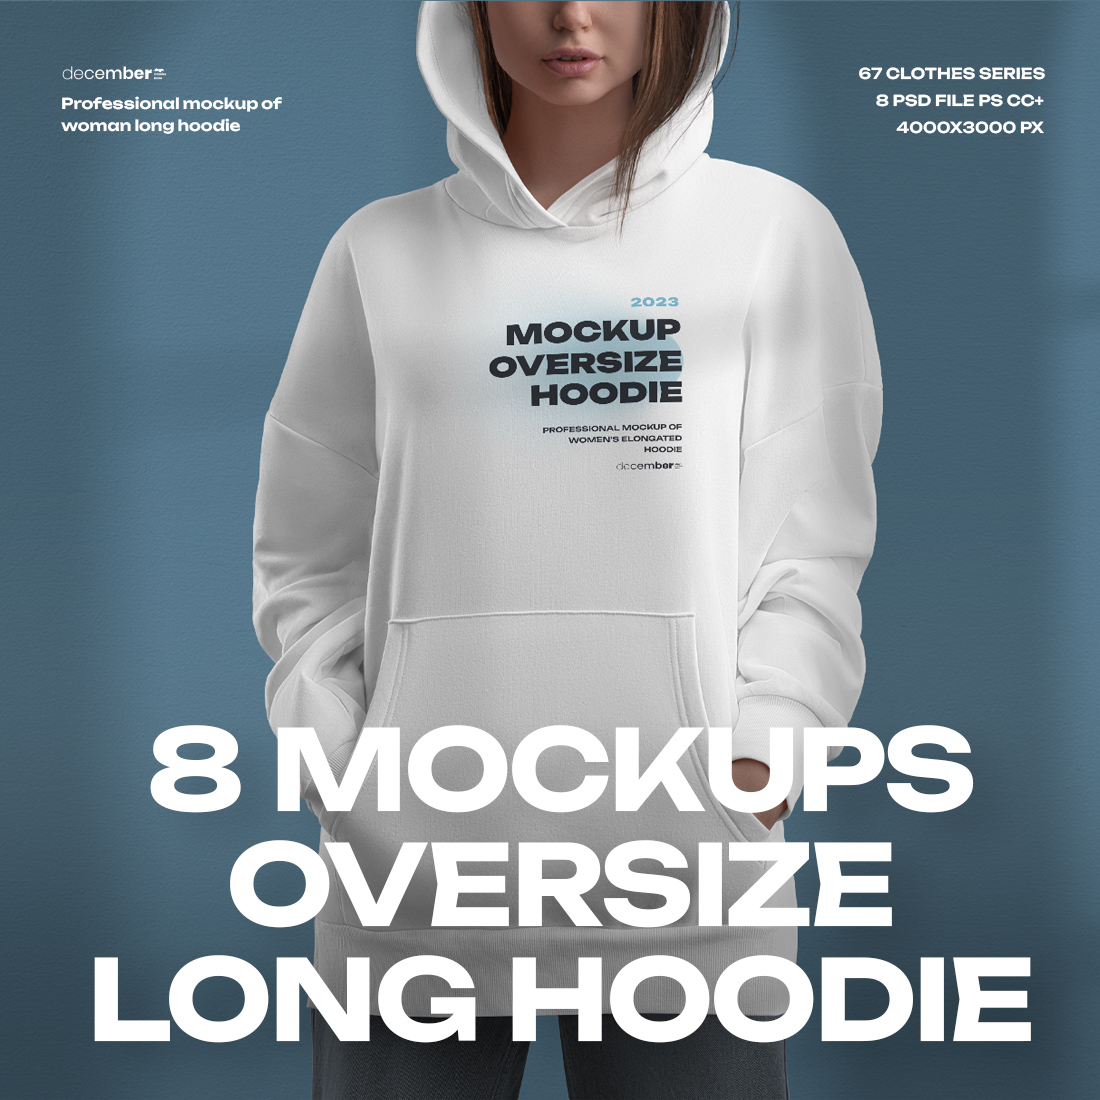 8 Mockups Woman Oversize Long Hoodie cover image.